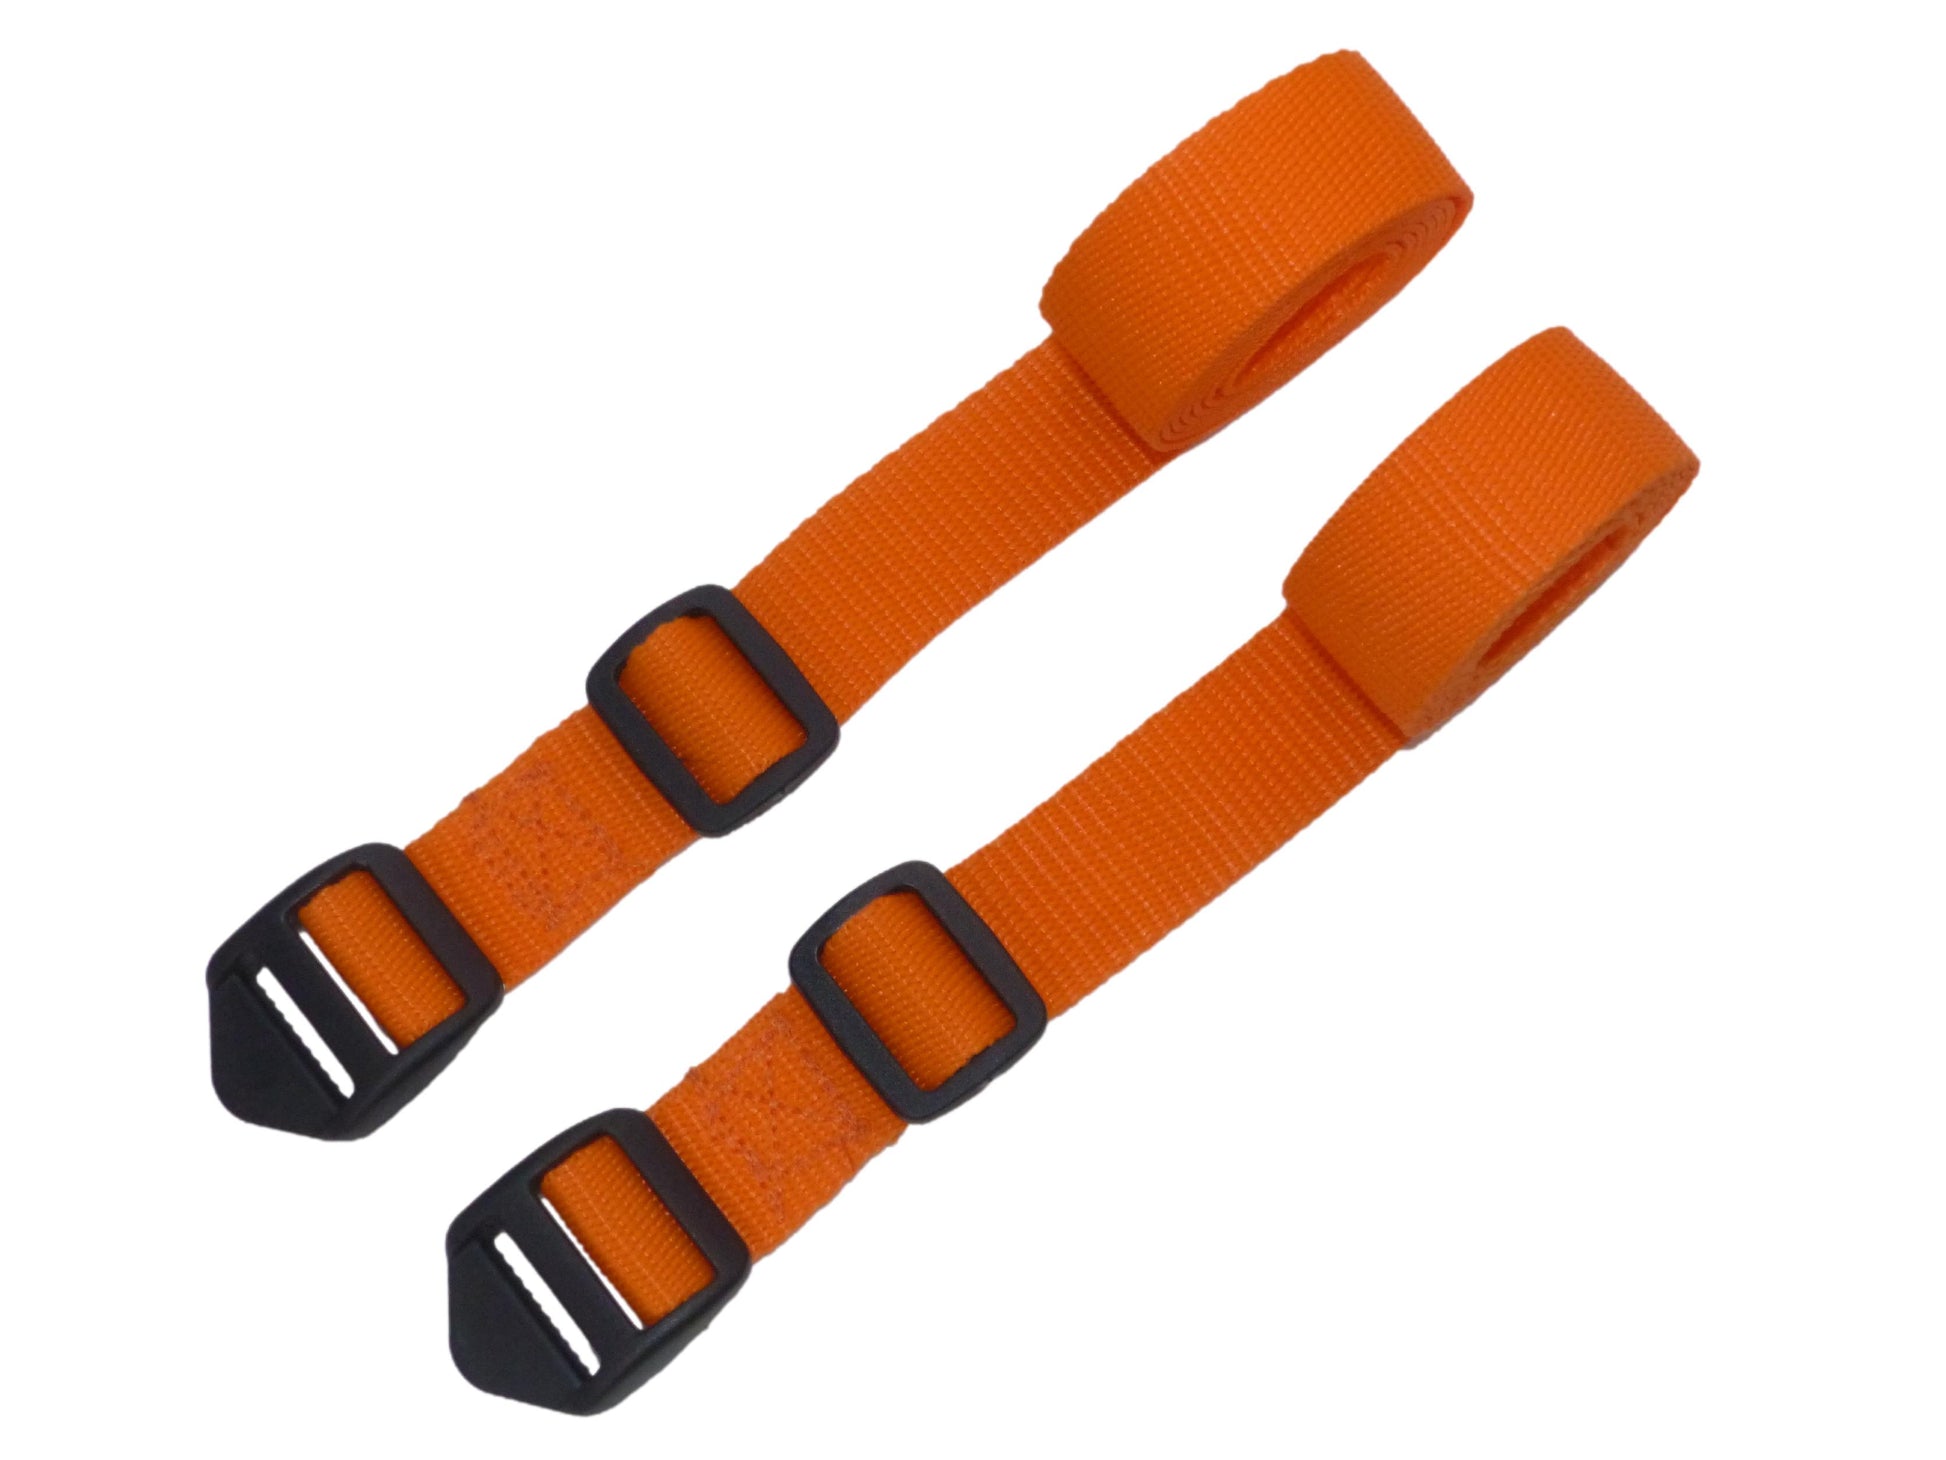 Benristraps 25mm Webbing Strap with Ladderloc Buckle (Pair) in orange